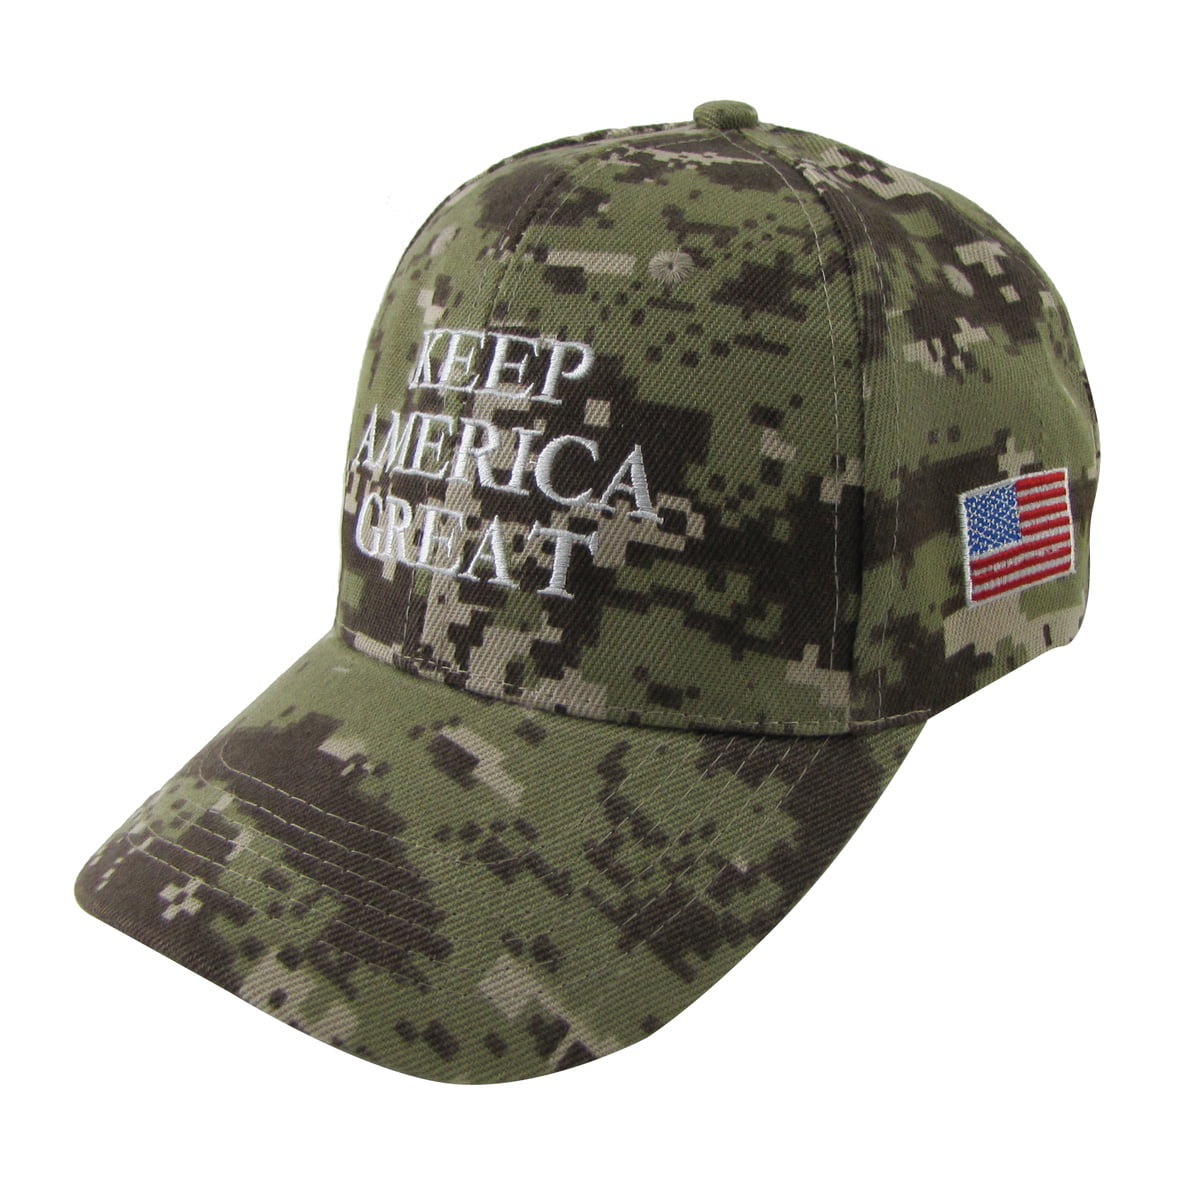 Donald Trump 2020 Cap Camouflage USA Flag Baseball Caps Keep America Great Hat.